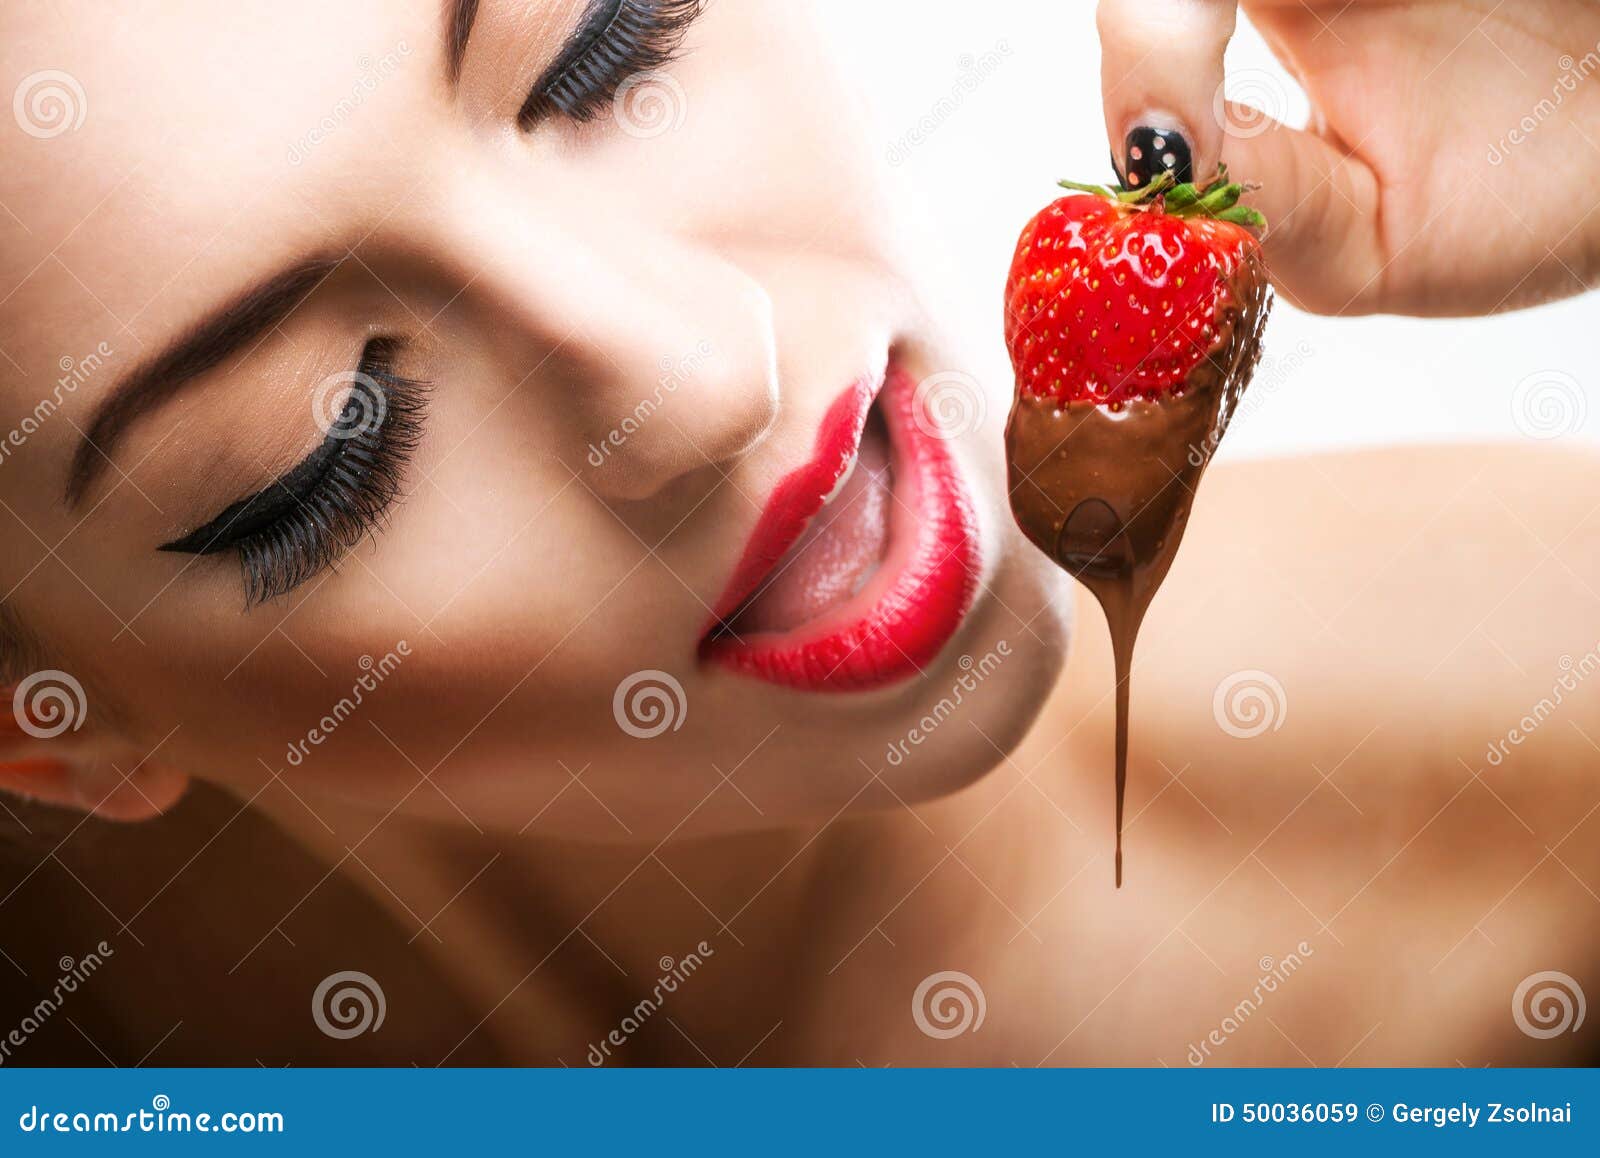 seduction - red female lips eating chocolate strawberries